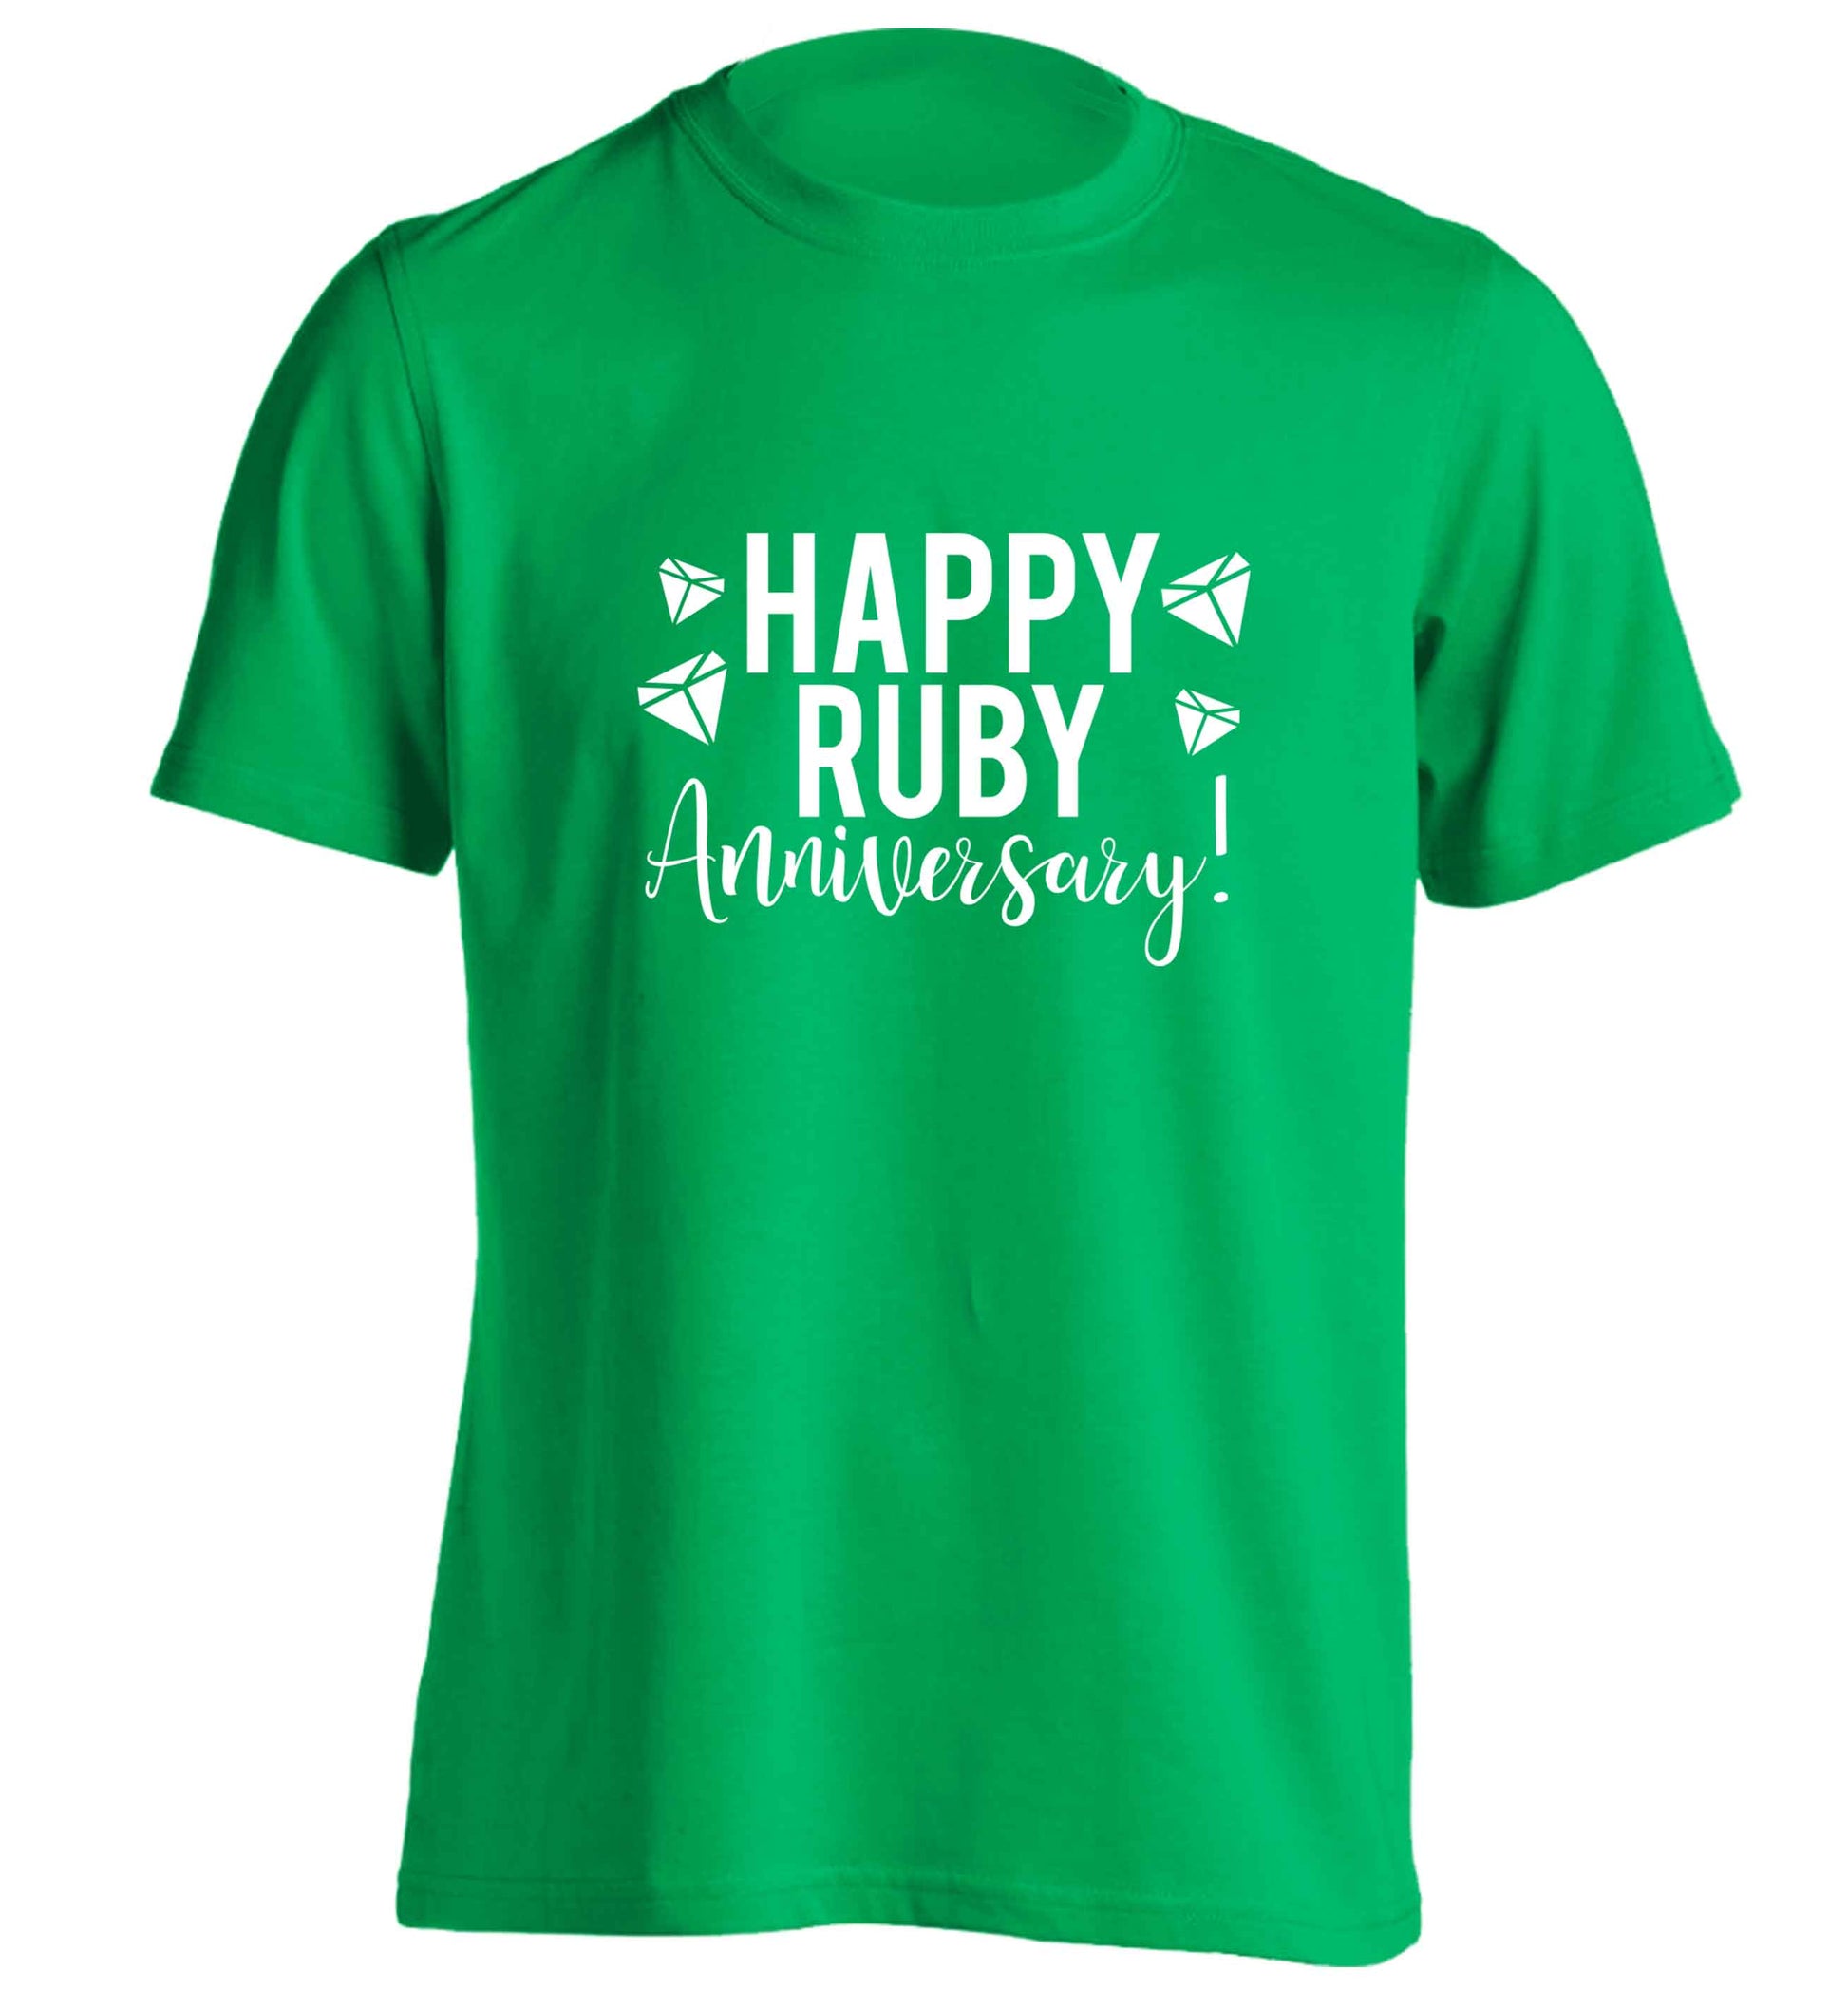 Happy ruby anniversary! adults unisex green Tshirt 2XL